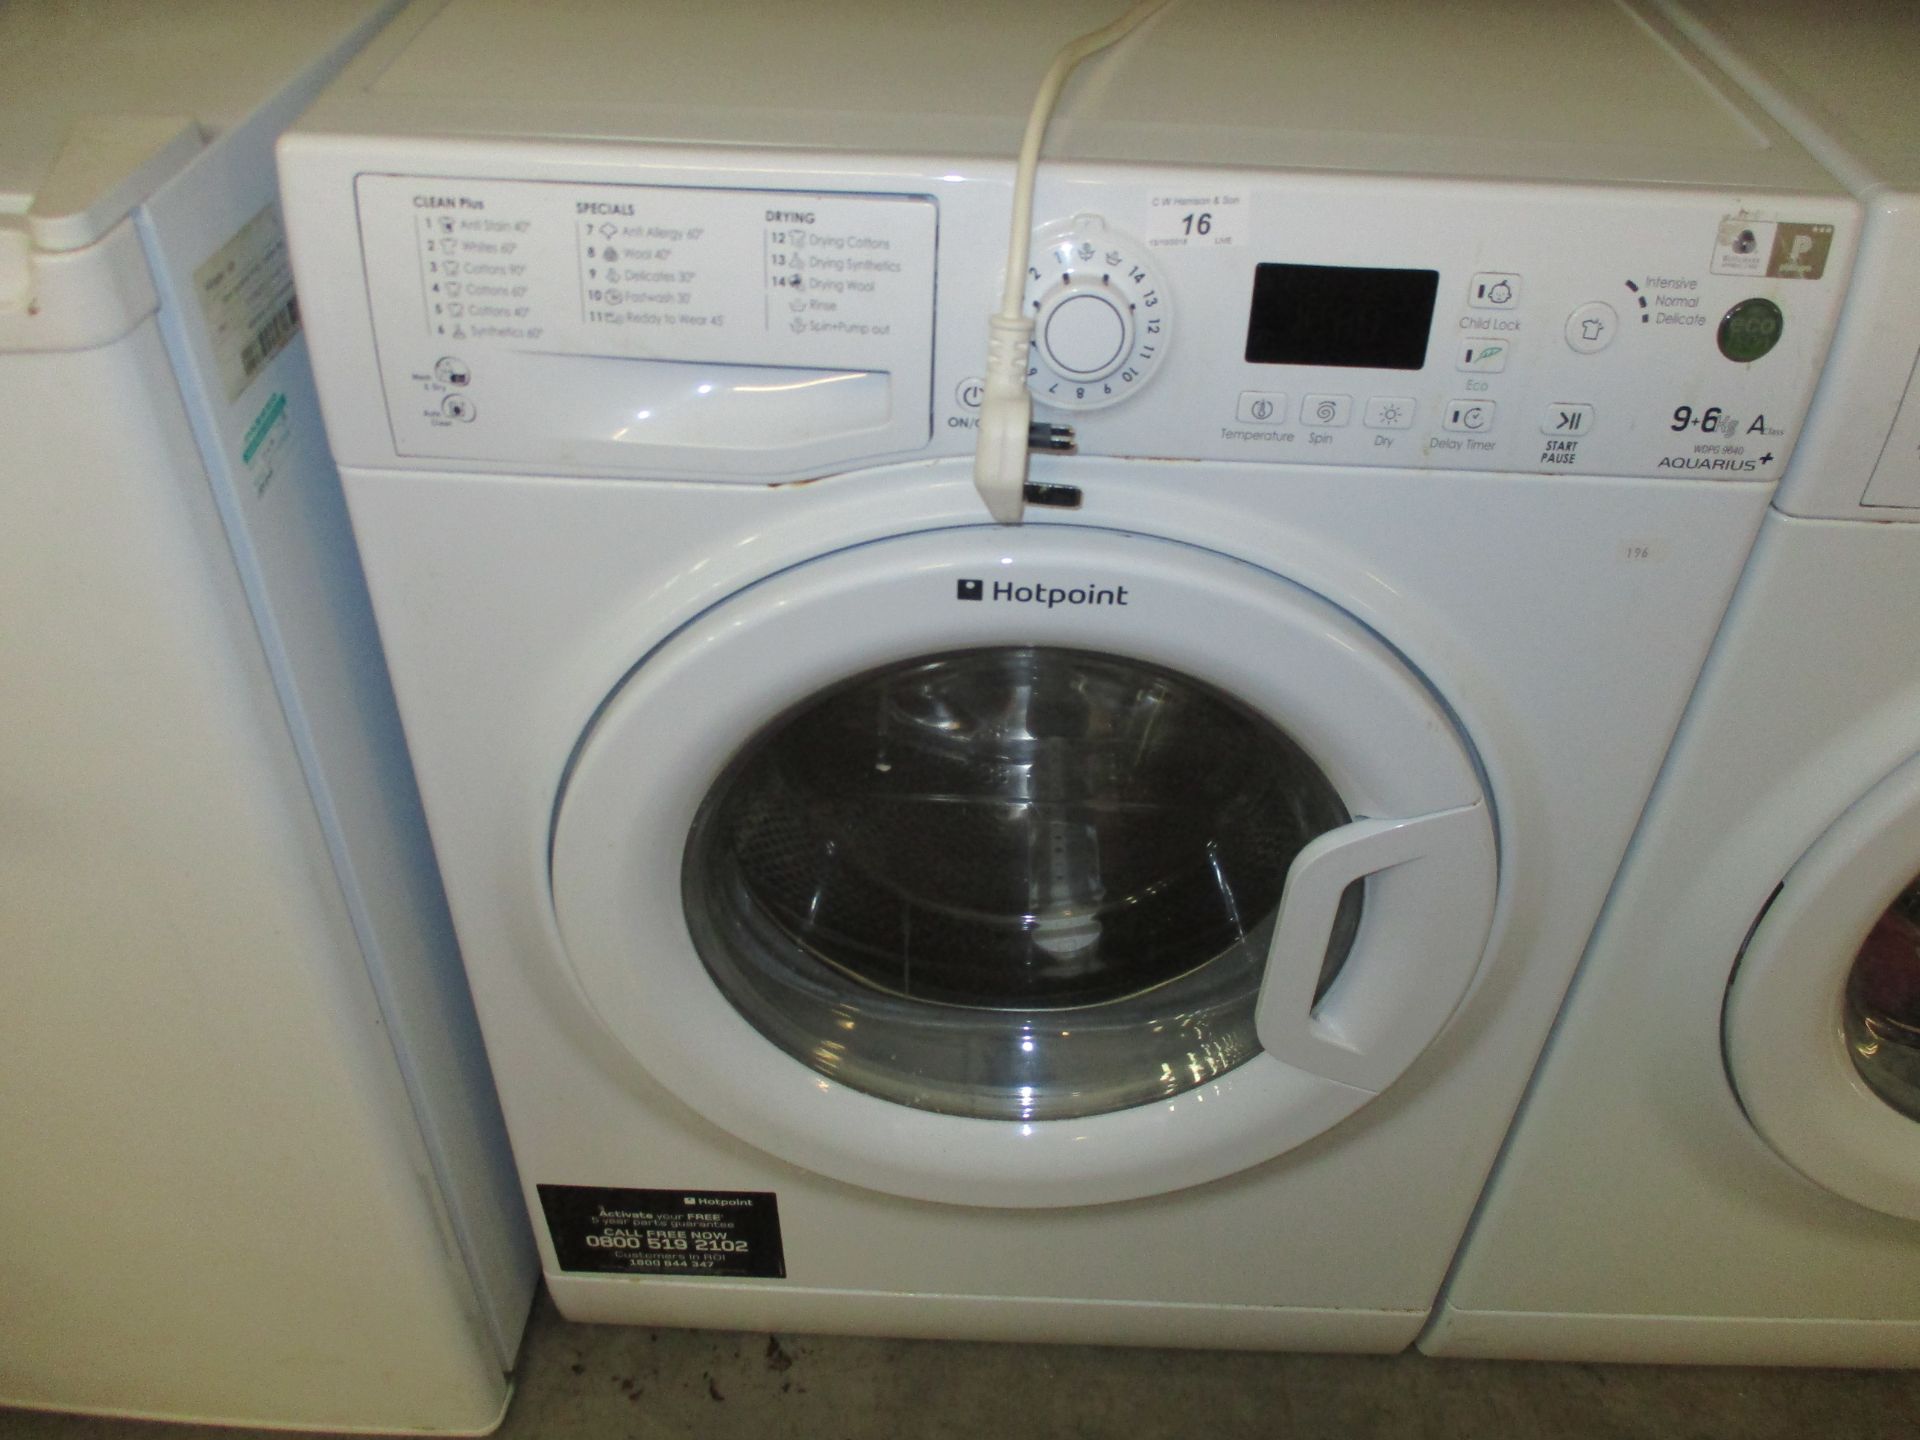 A Hotpoint WDPG 9640 Aquarius 9+ 6kg A Class automatic washing machine